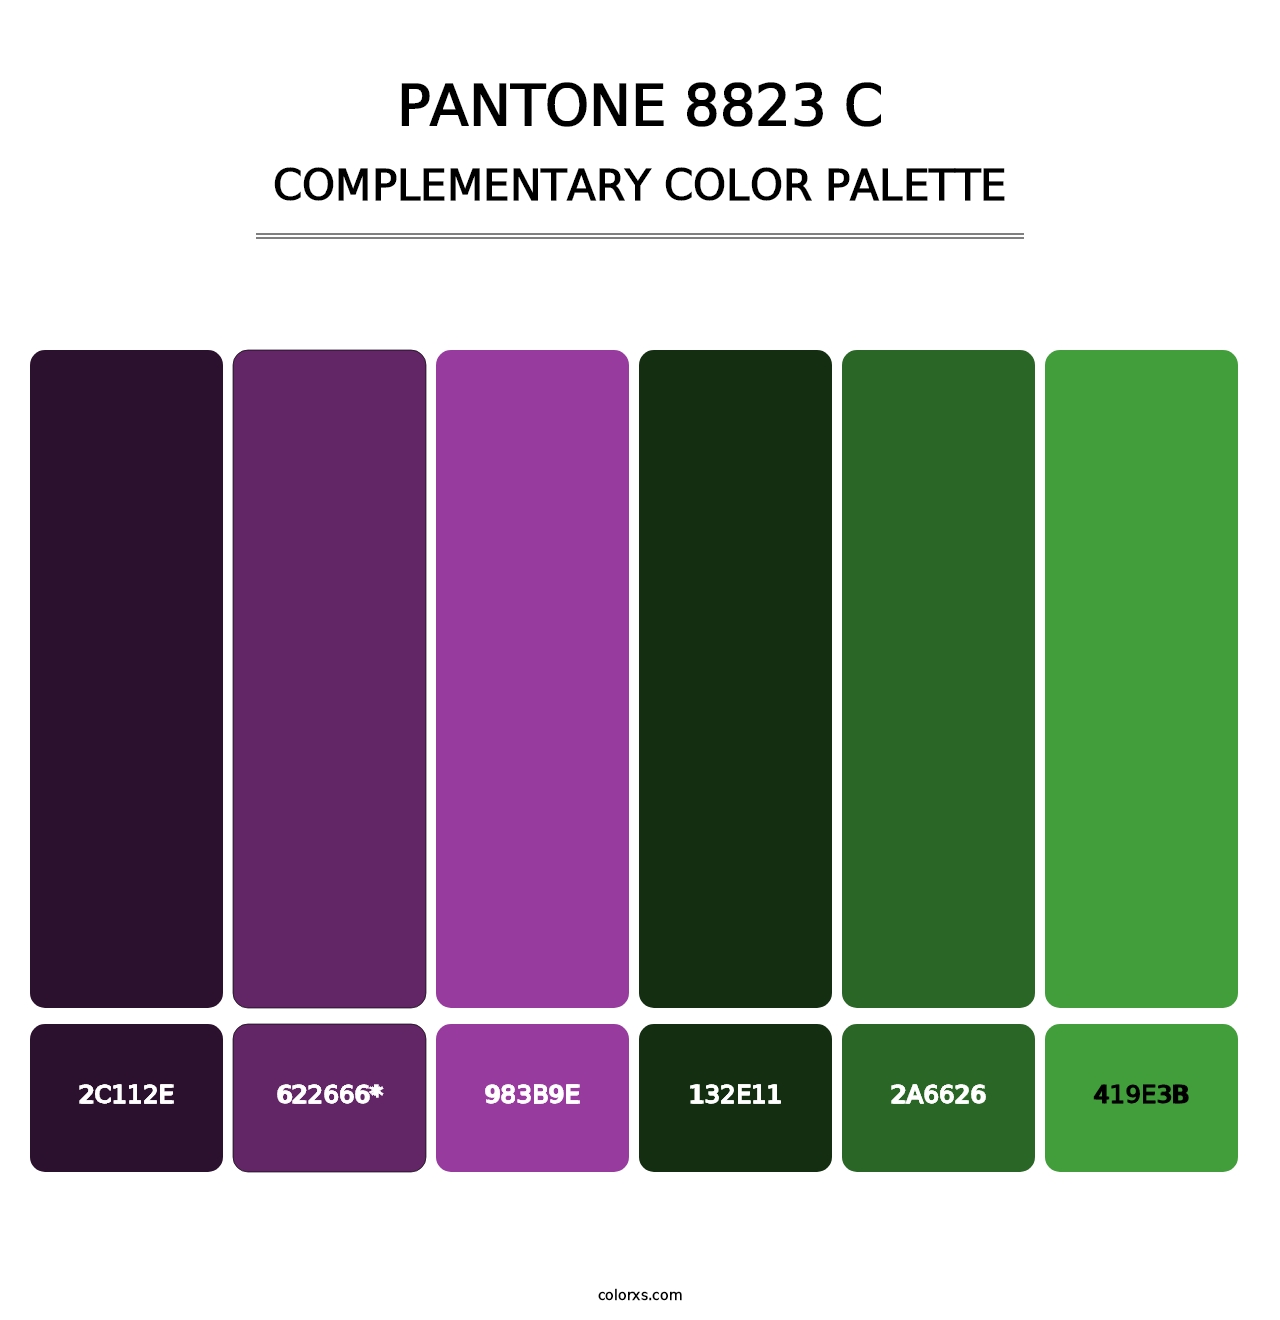 PANTONE 8823 C - Complementary Color Palette